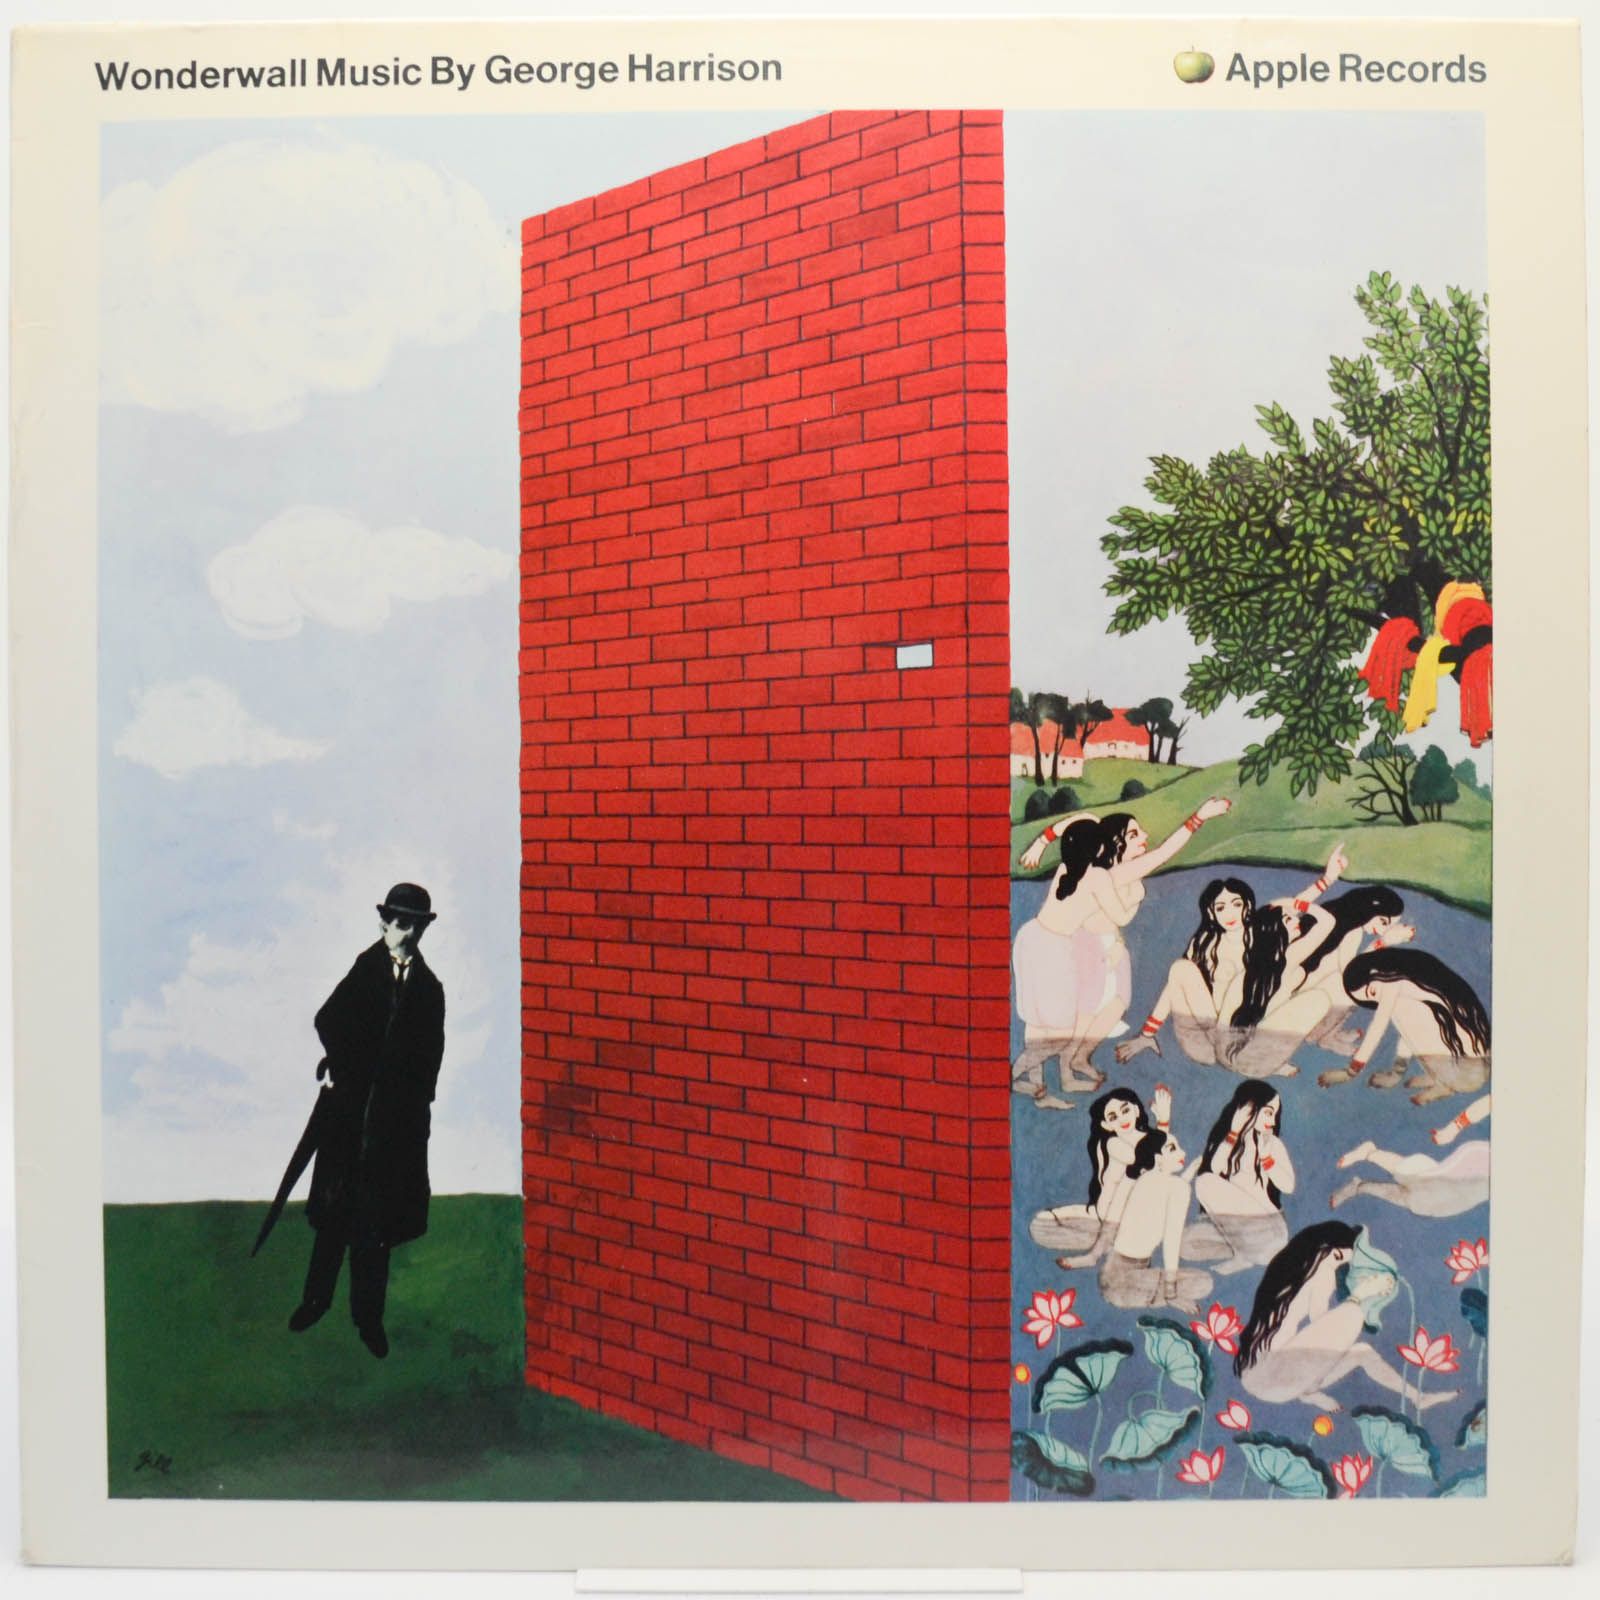 George Harrison — Wonderwall Music, 1968